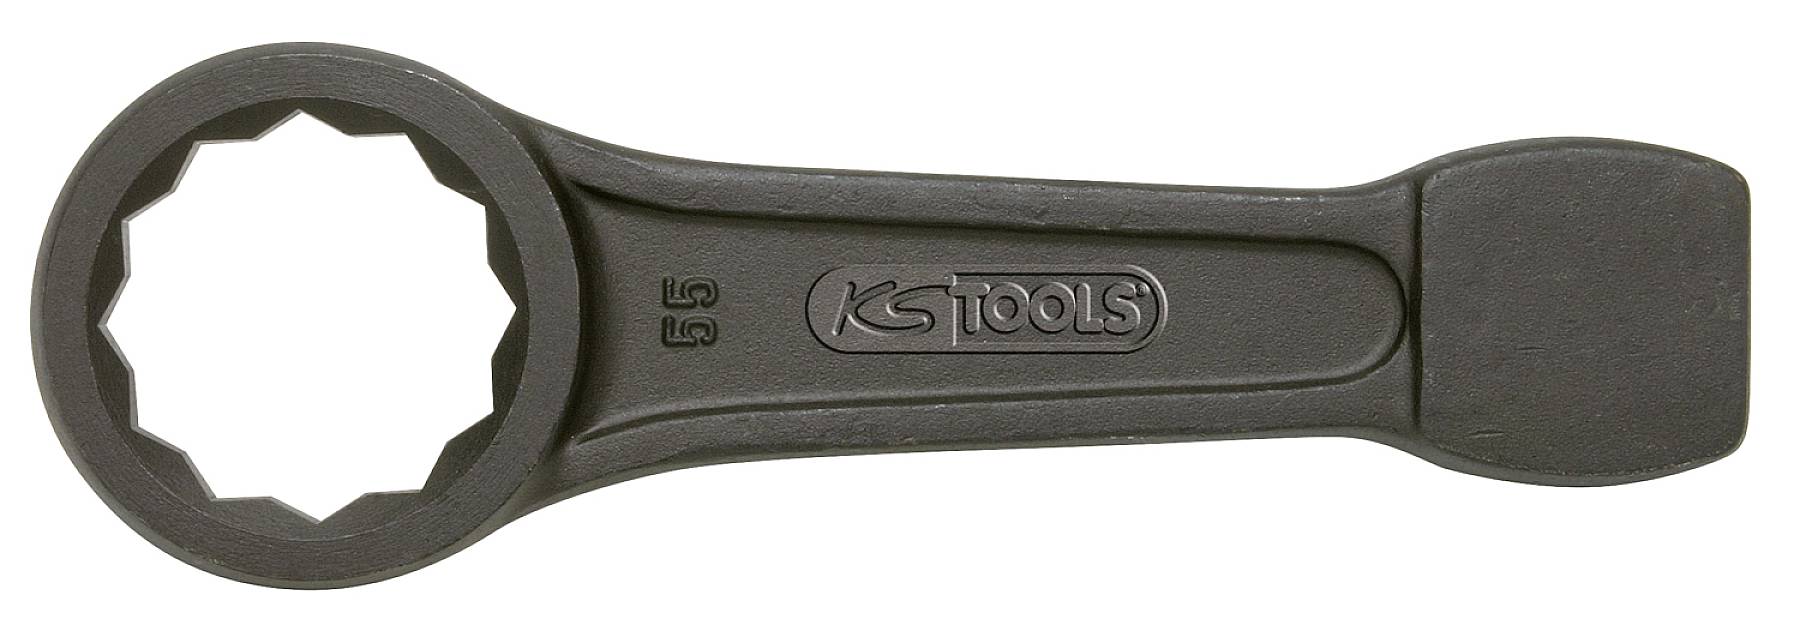 KS TOOLS Werkzeuge-Maschinen GmbH Schlag-Ringschlüssel, 210mm (517.2910)